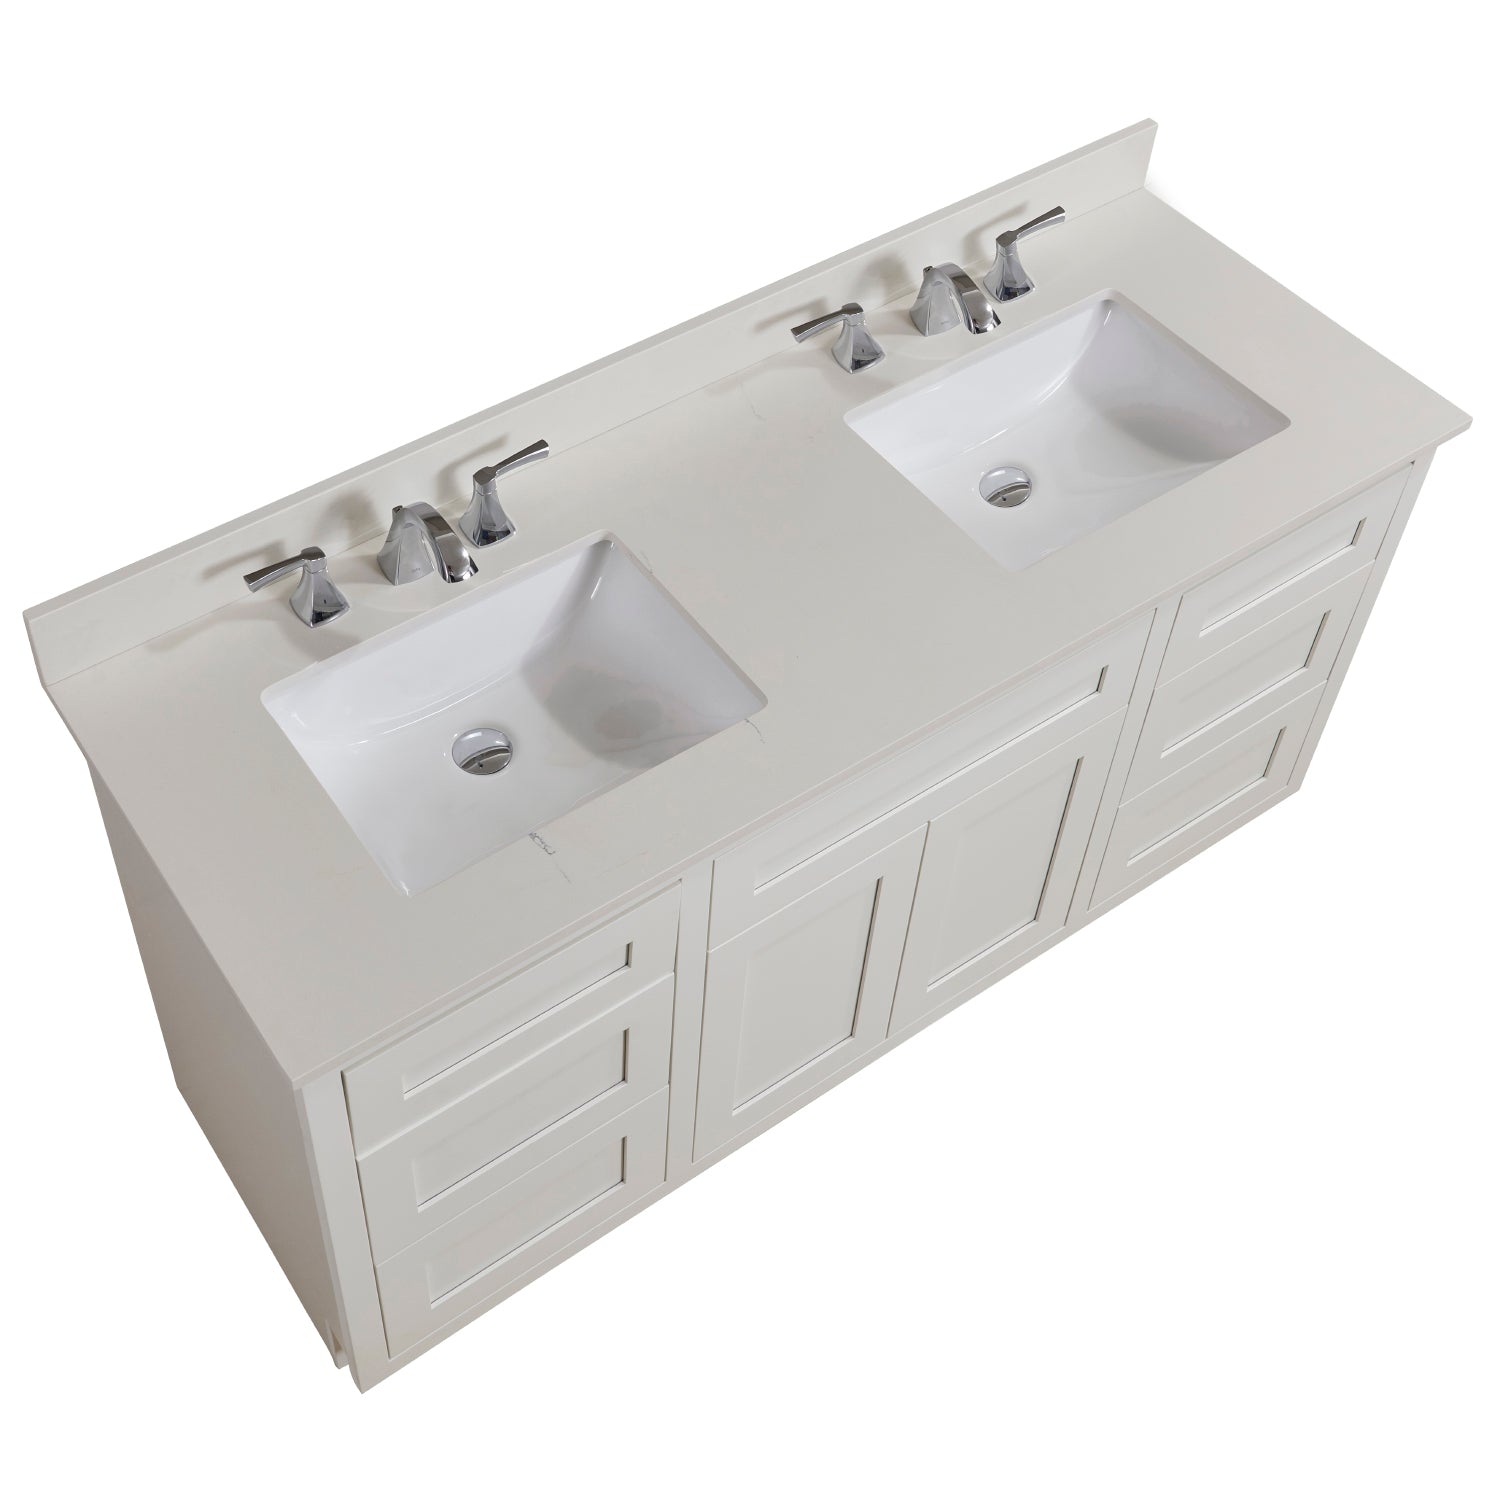 Belluno Double Sink Bathroom Vanity Countertop in Milano White